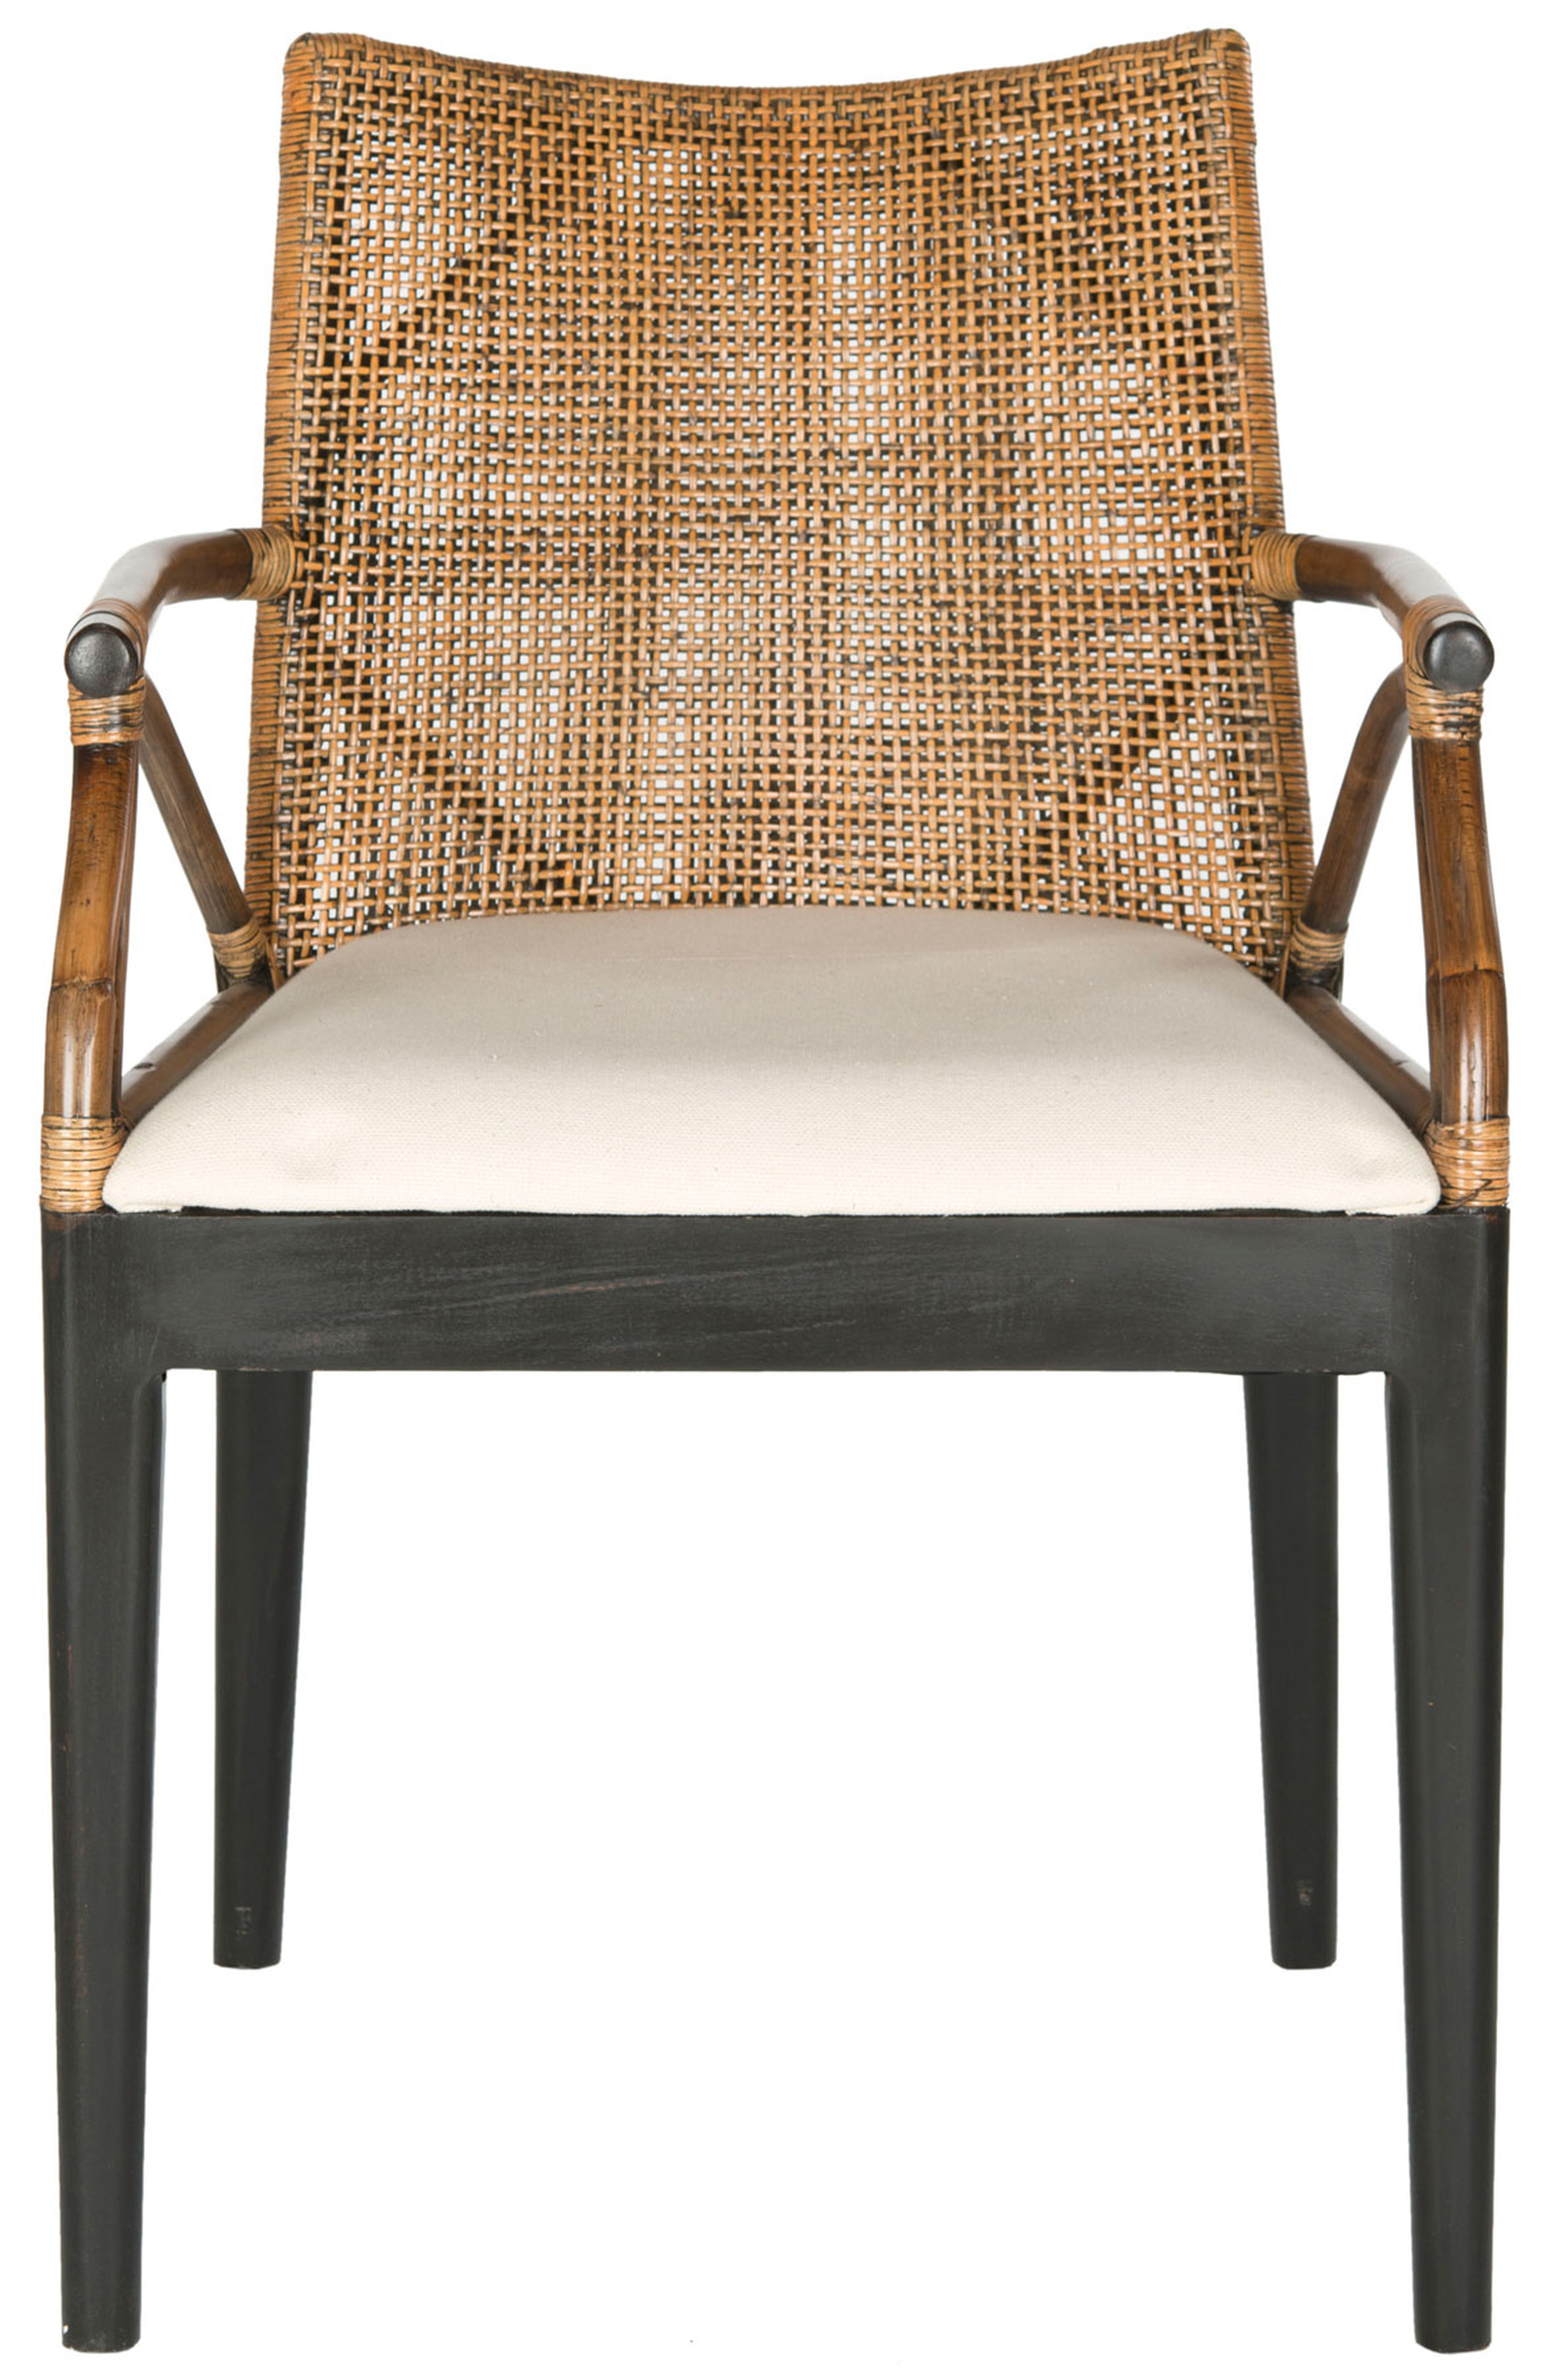 Gianni Arm Chair - Brown/White - Arlo Home - Arlo Home